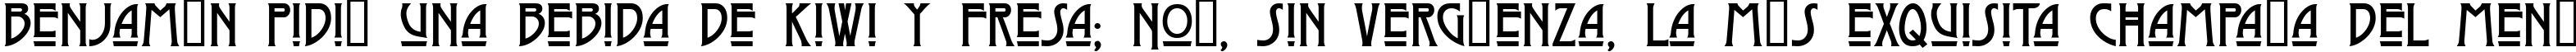 Пример написания шрифтом Moderno Three текста на испанском